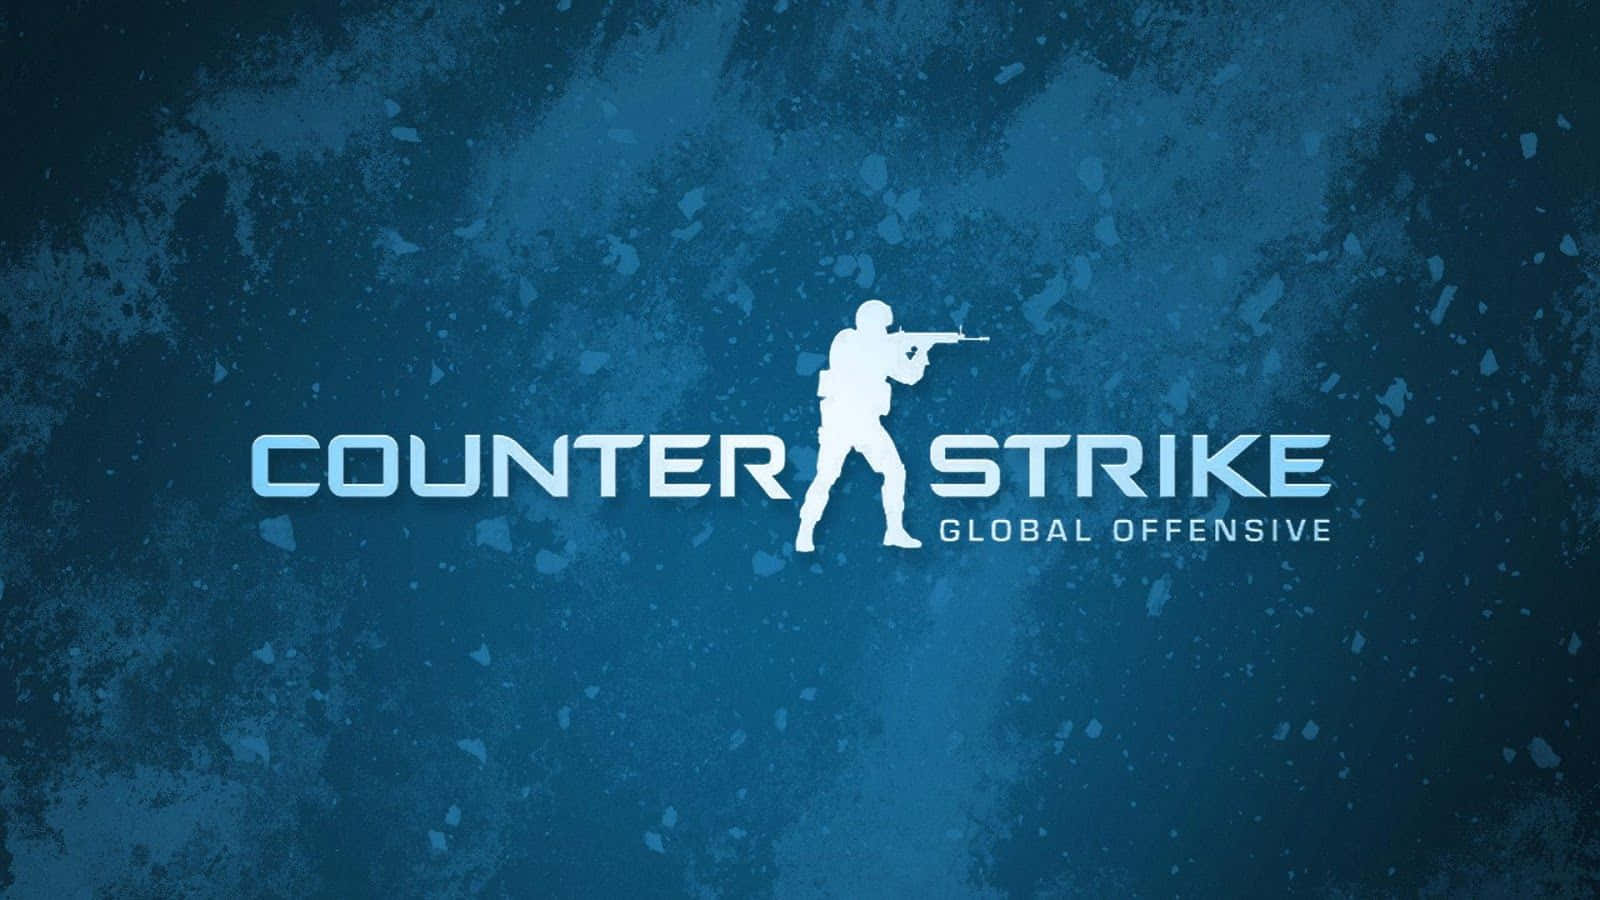 Logode Counter-strike: Global Offensive